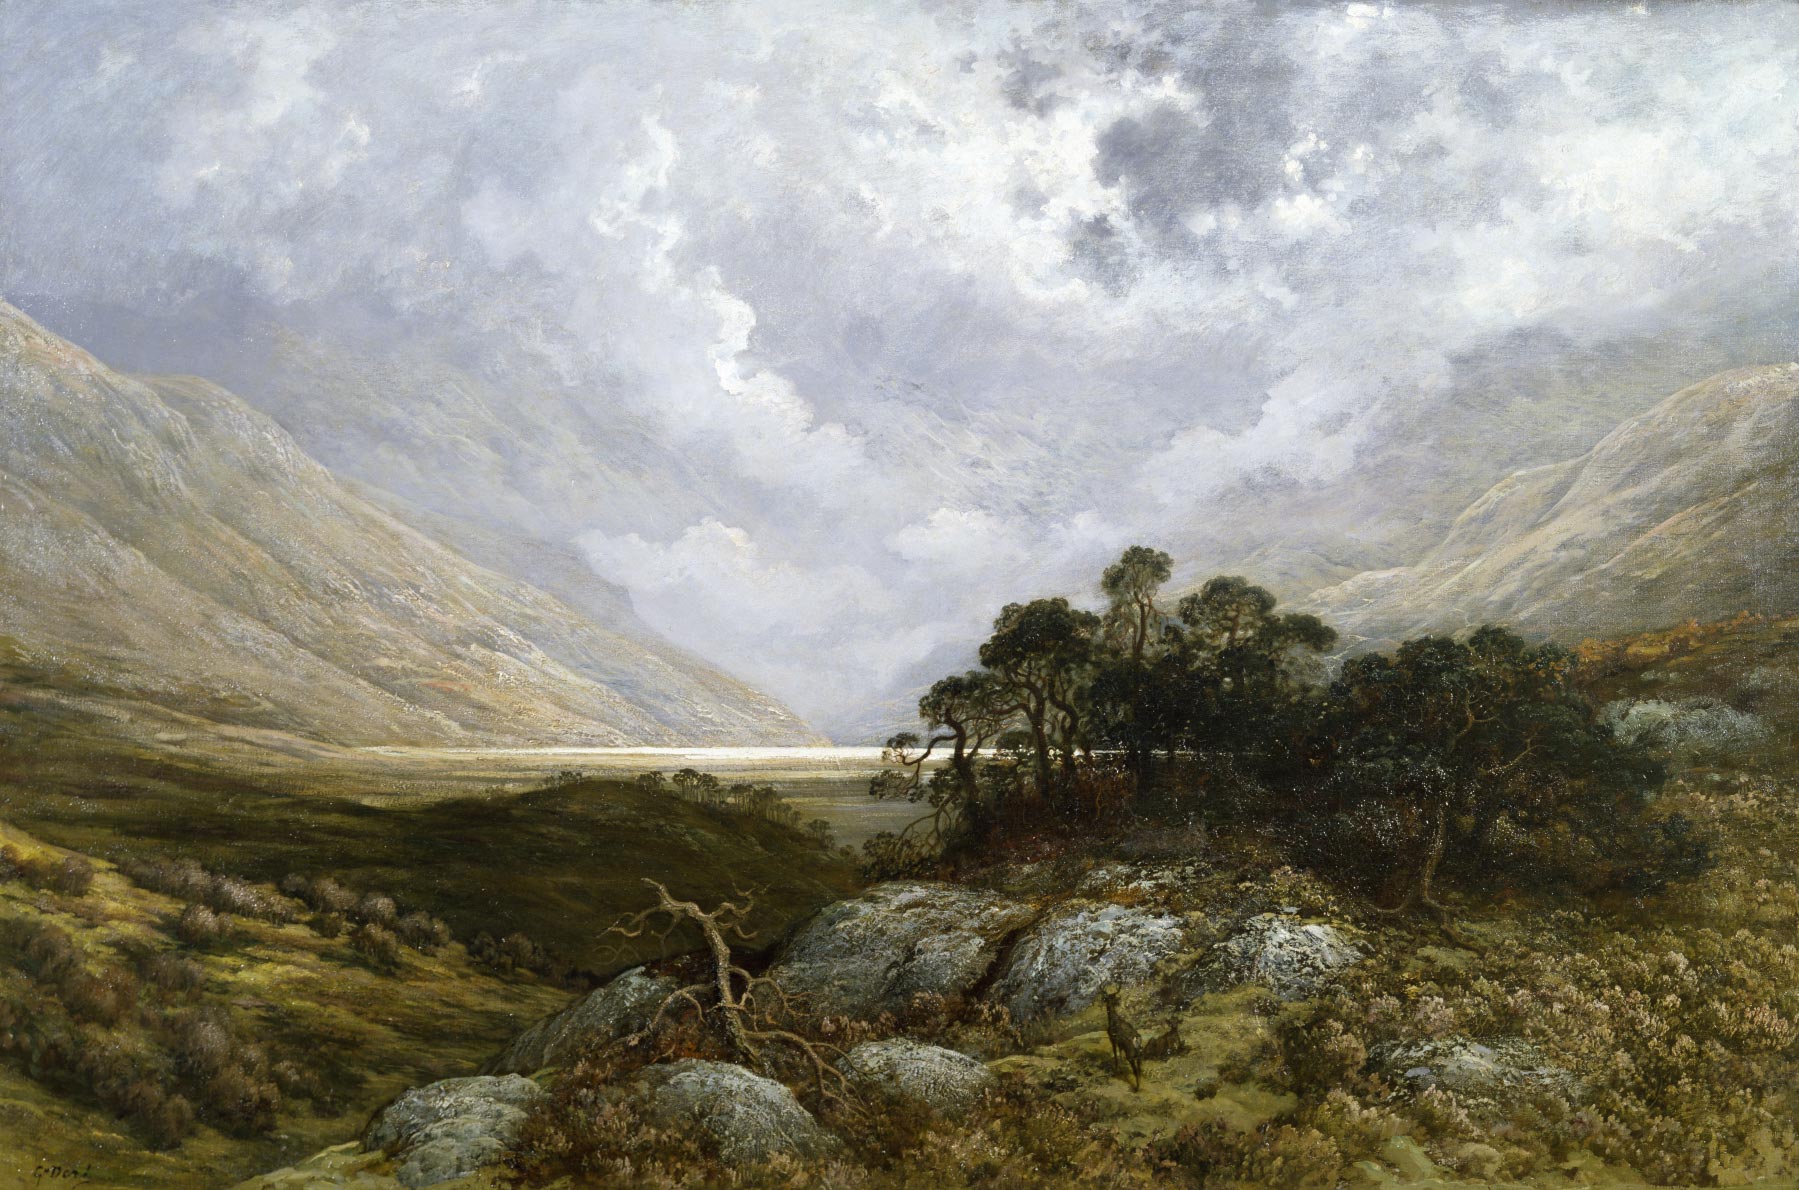 Gustave Doré. Landskap i Skottland, ca. 1878. Oljemaleri, lerrett 131 x 196. Walters Kunstmuseum, Baltimore.